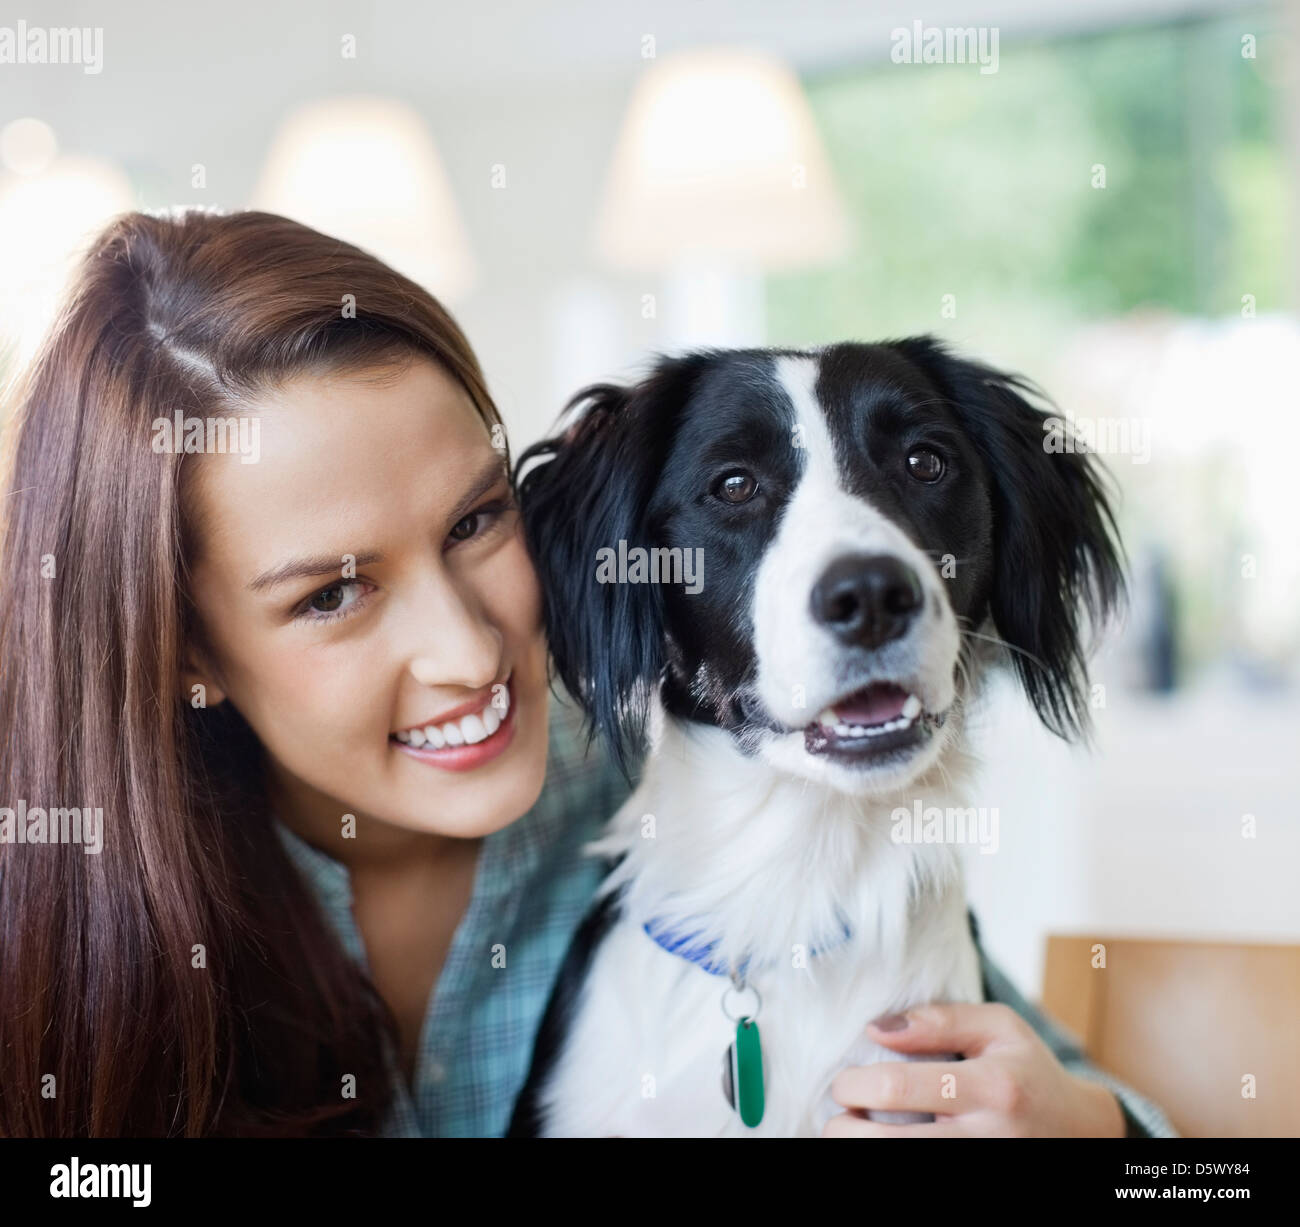 Smiling woman hugging dog indoors Banque D'Images